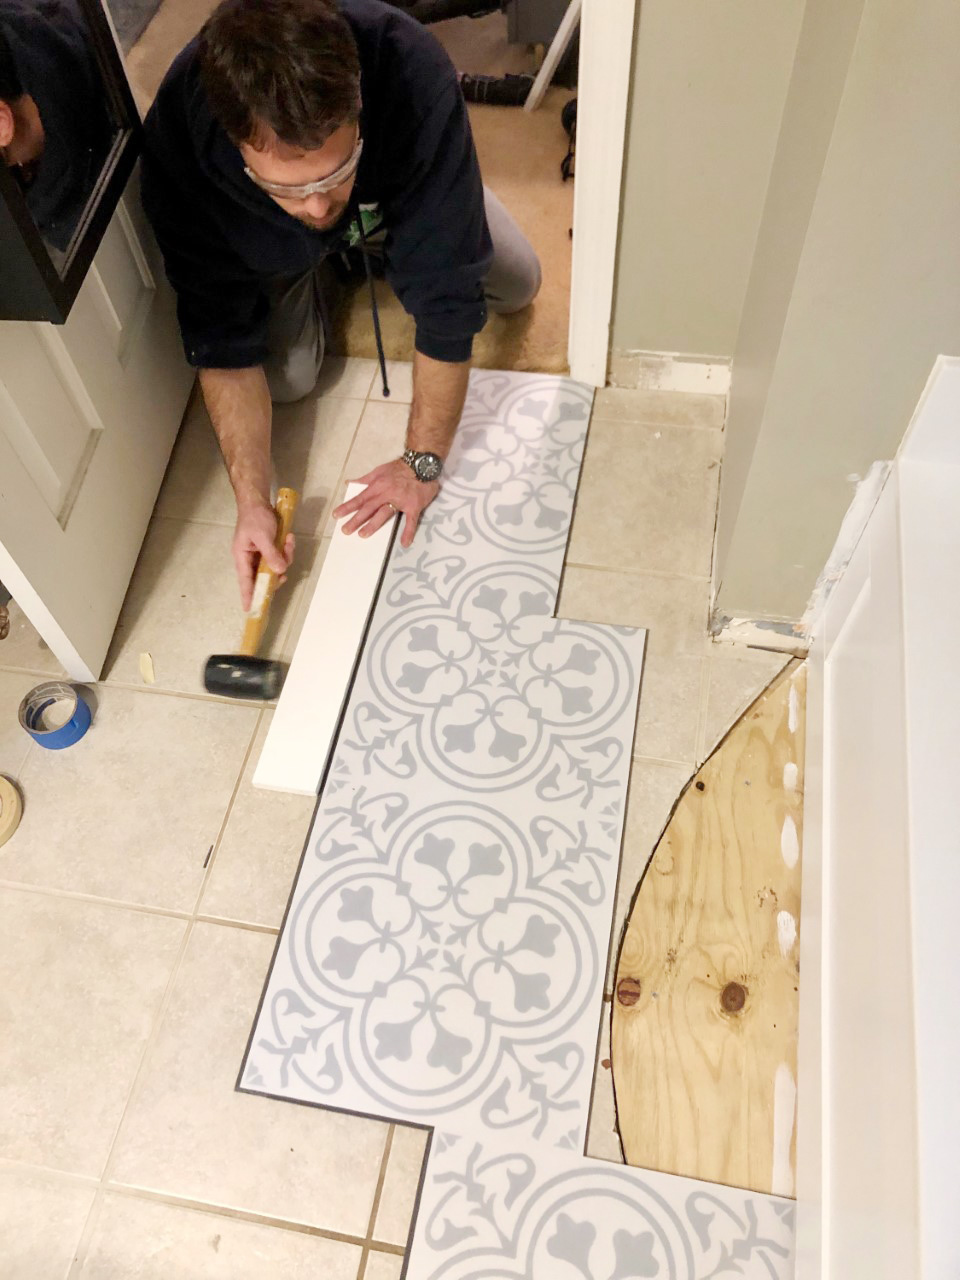 LVT Flooring Over Existing Tile the Easy Way - Vinyl Floor Installation DIY